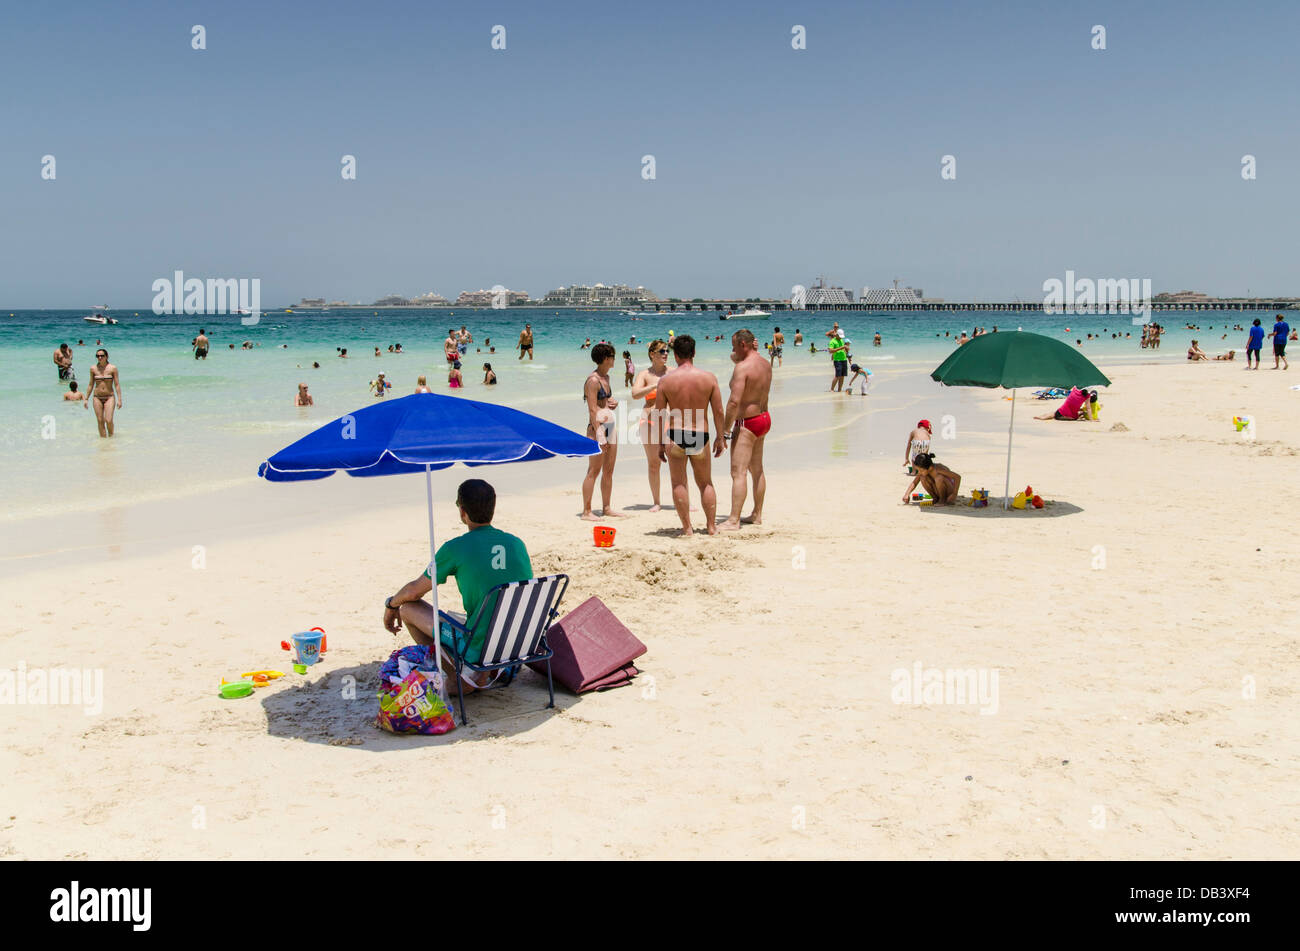 Marina Beach along the Jumeirah Beach Residence strip, Dubai, United Arab Emirates Stock Photo